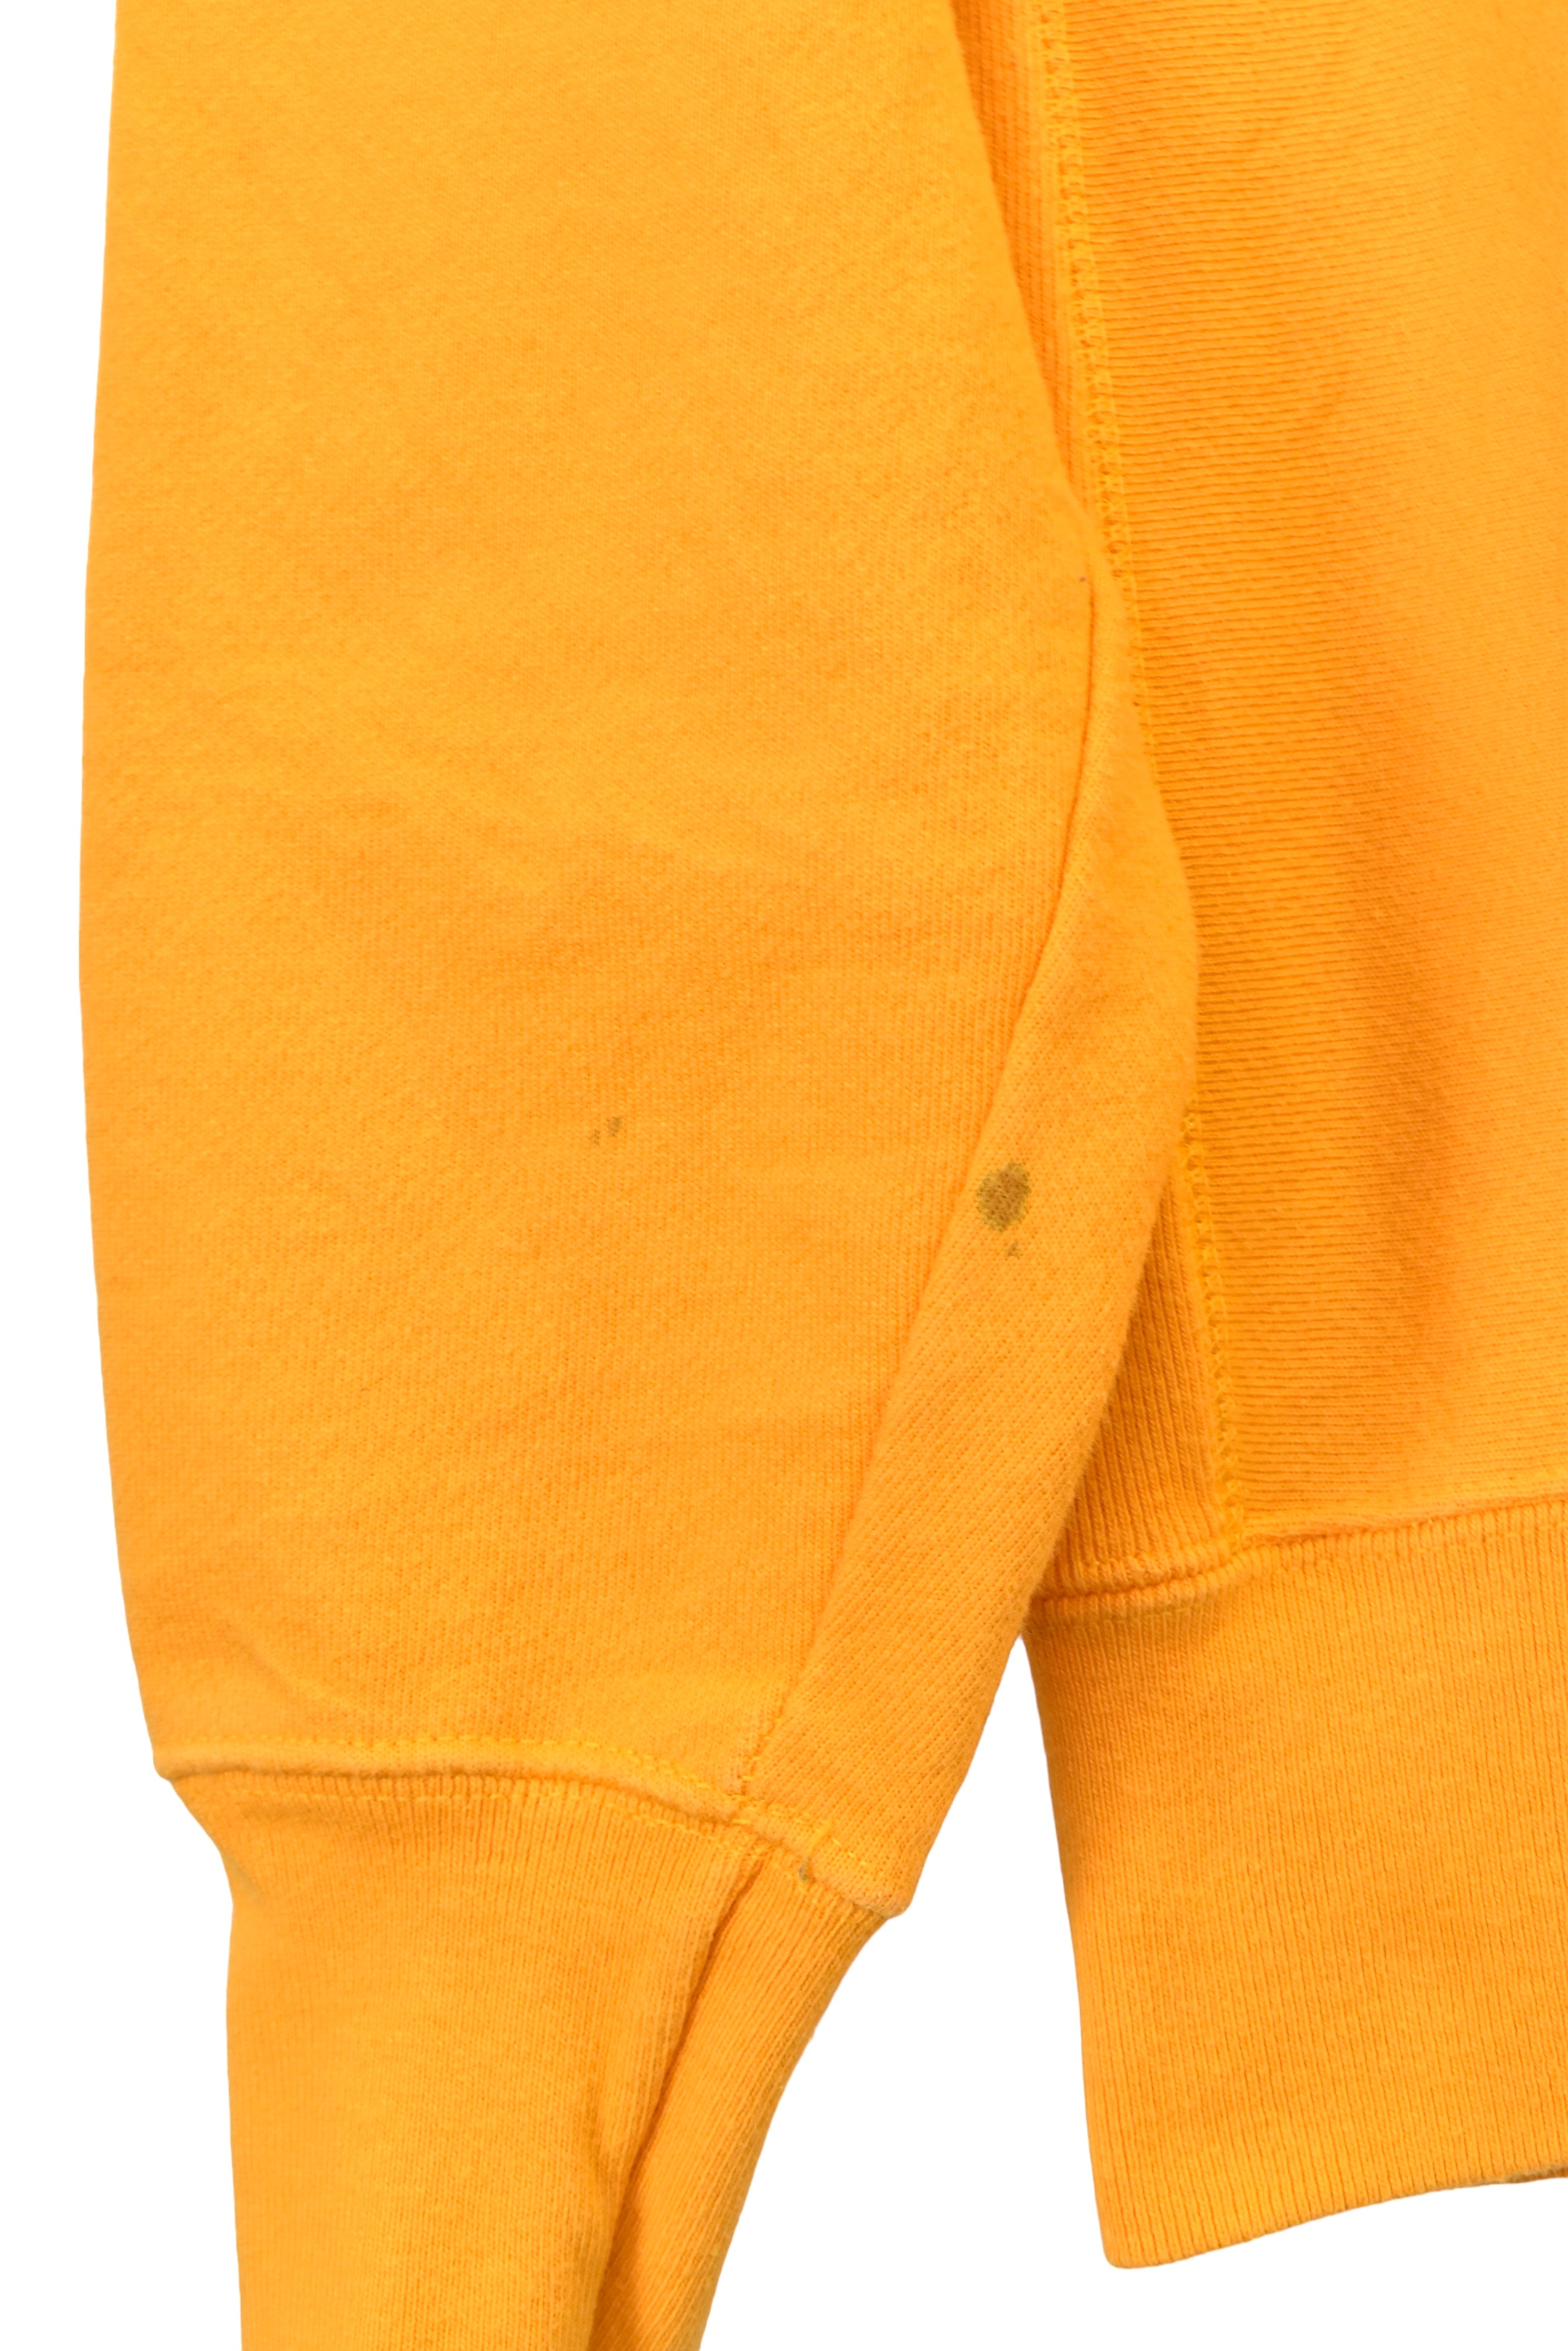 Modern Champion sweatshirt (M), yellow logo crewneck